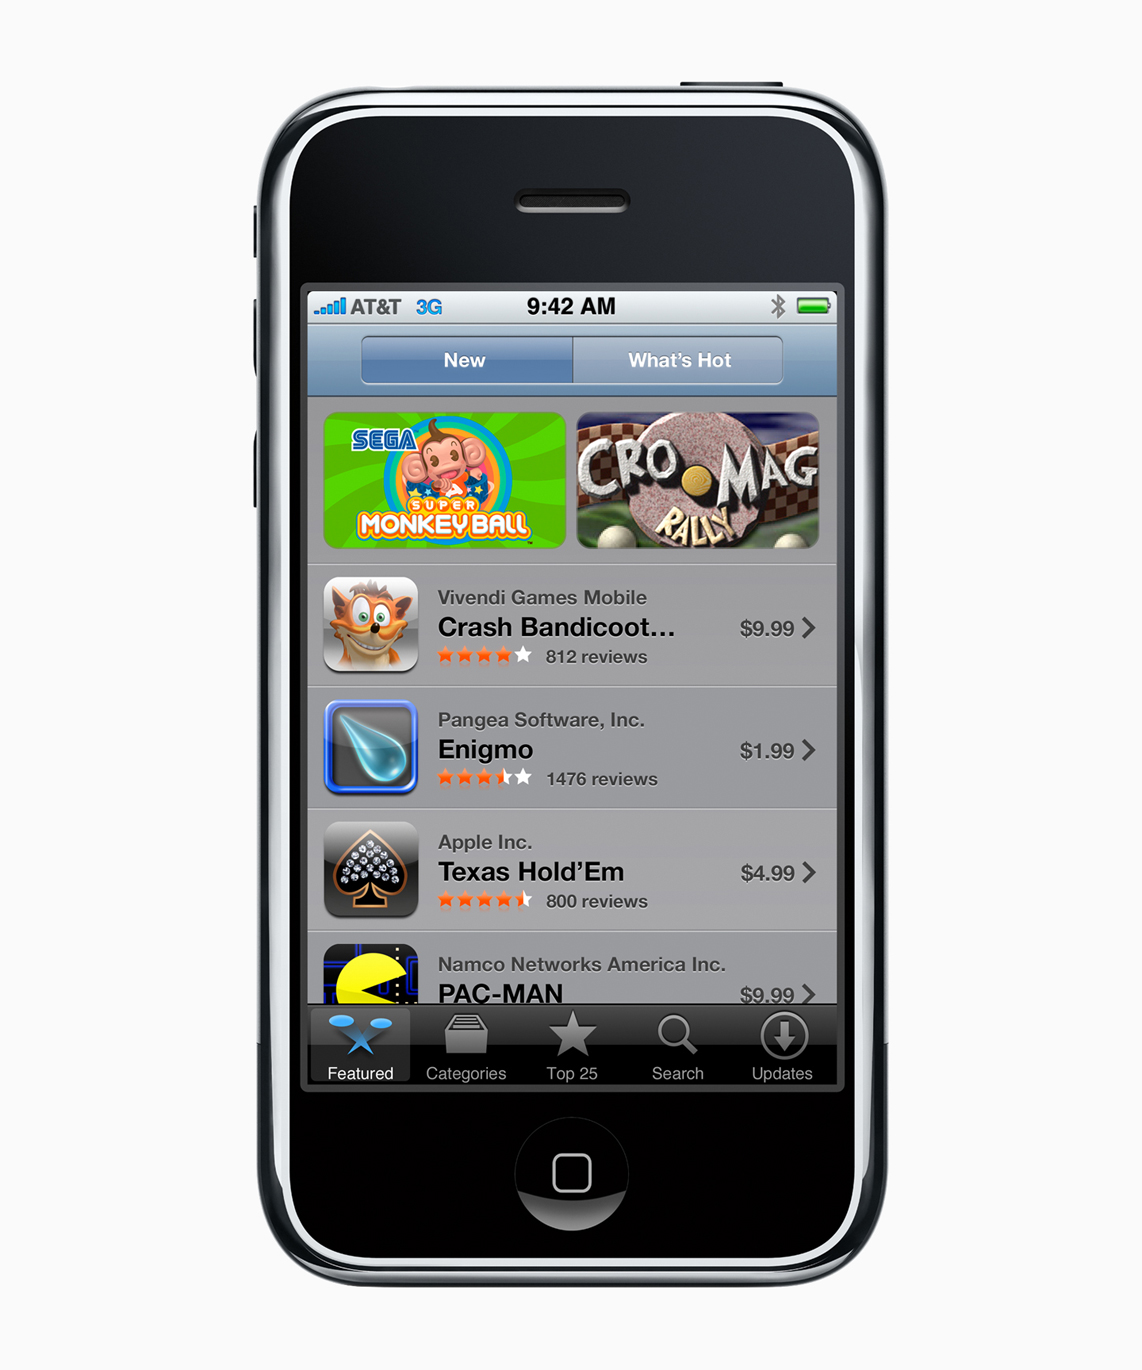 App_Store_10th_anniversary_iPhone_first_gen_07102018_inline.jpg.large_2x.jpg